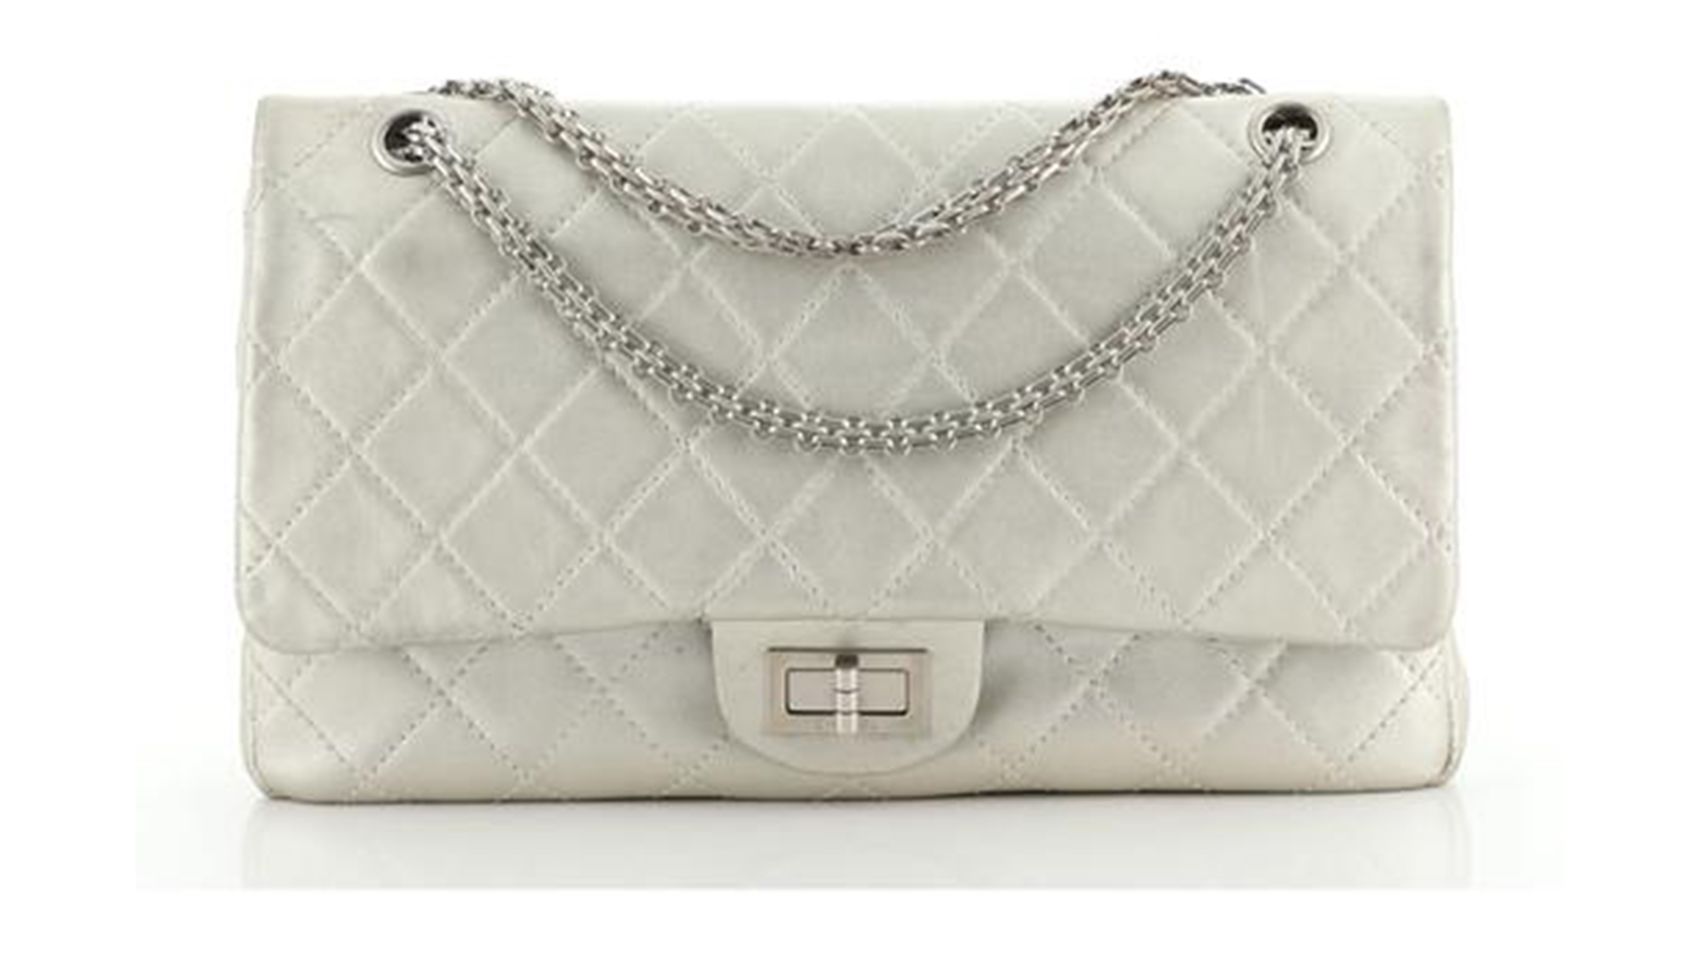 Chanel Women's Luxury Brand Clothing, Handbags, Footwear, Fashion  Accessories